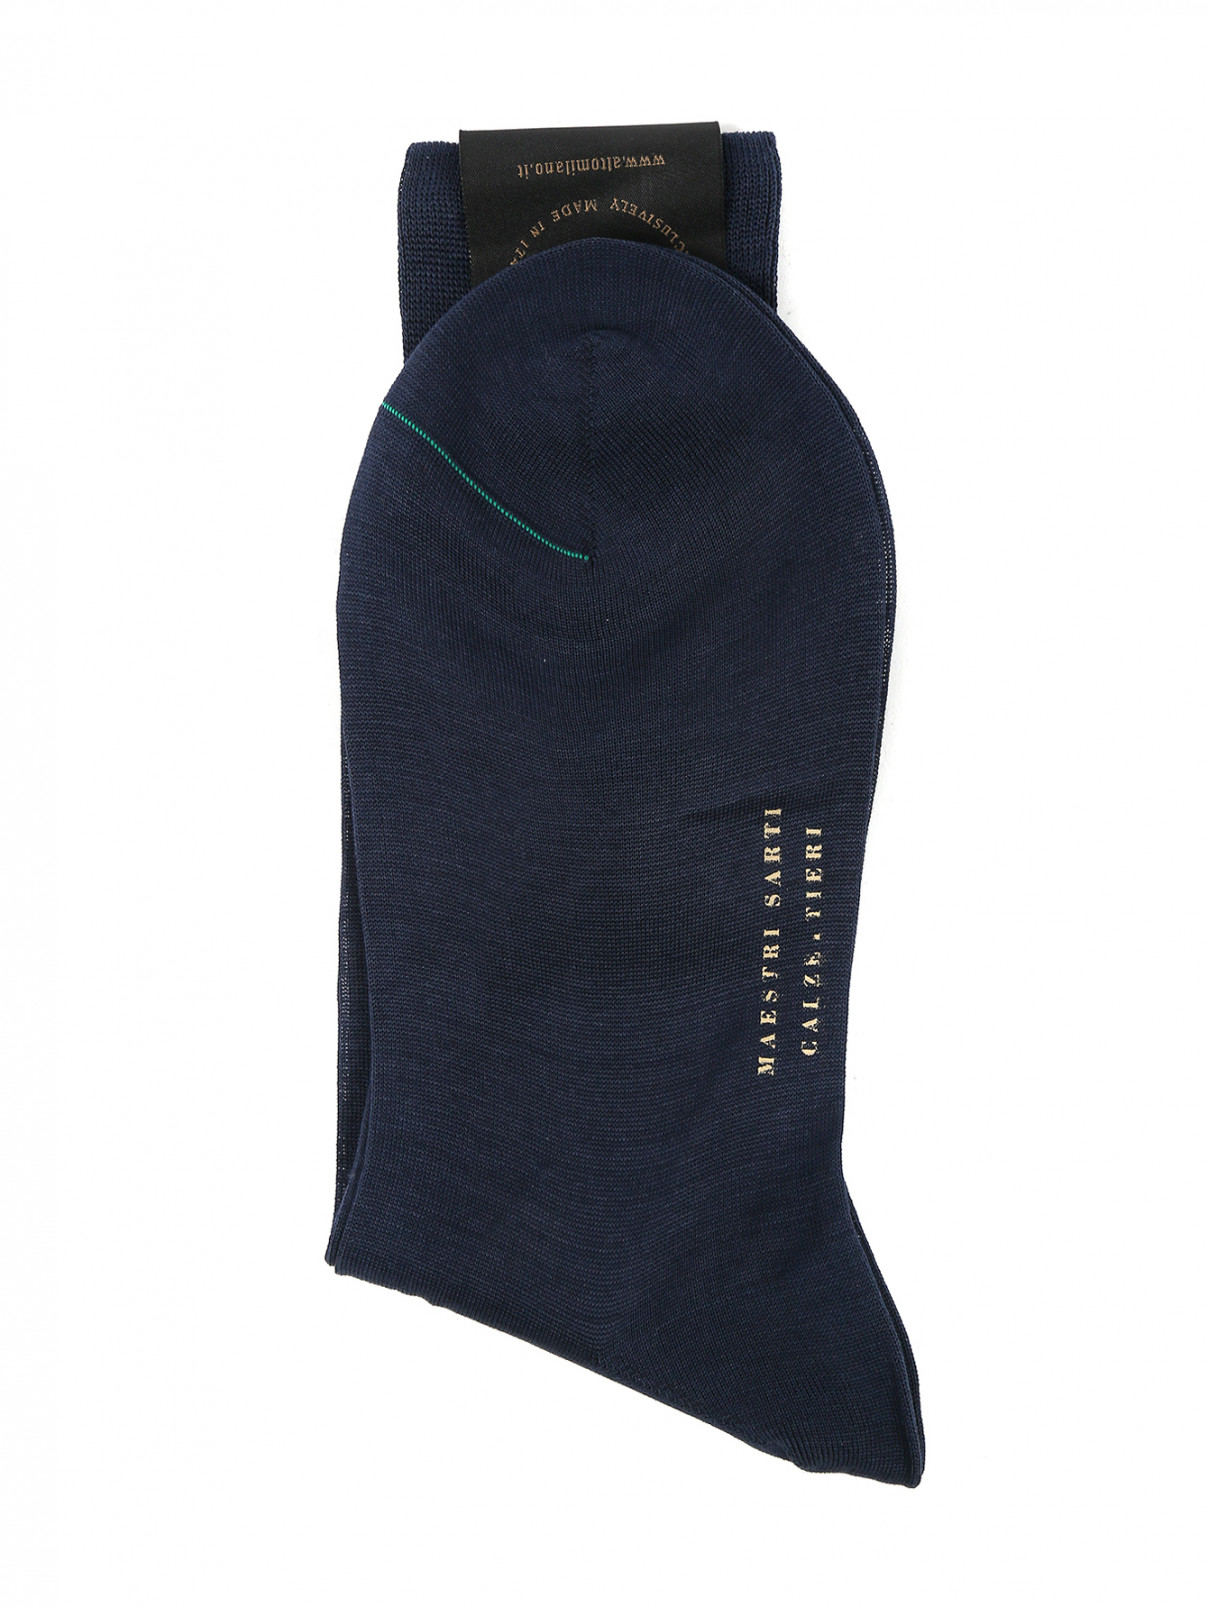 Носки из хлопка Peekaboo  –  Общий вид  – Цвет:  Синий